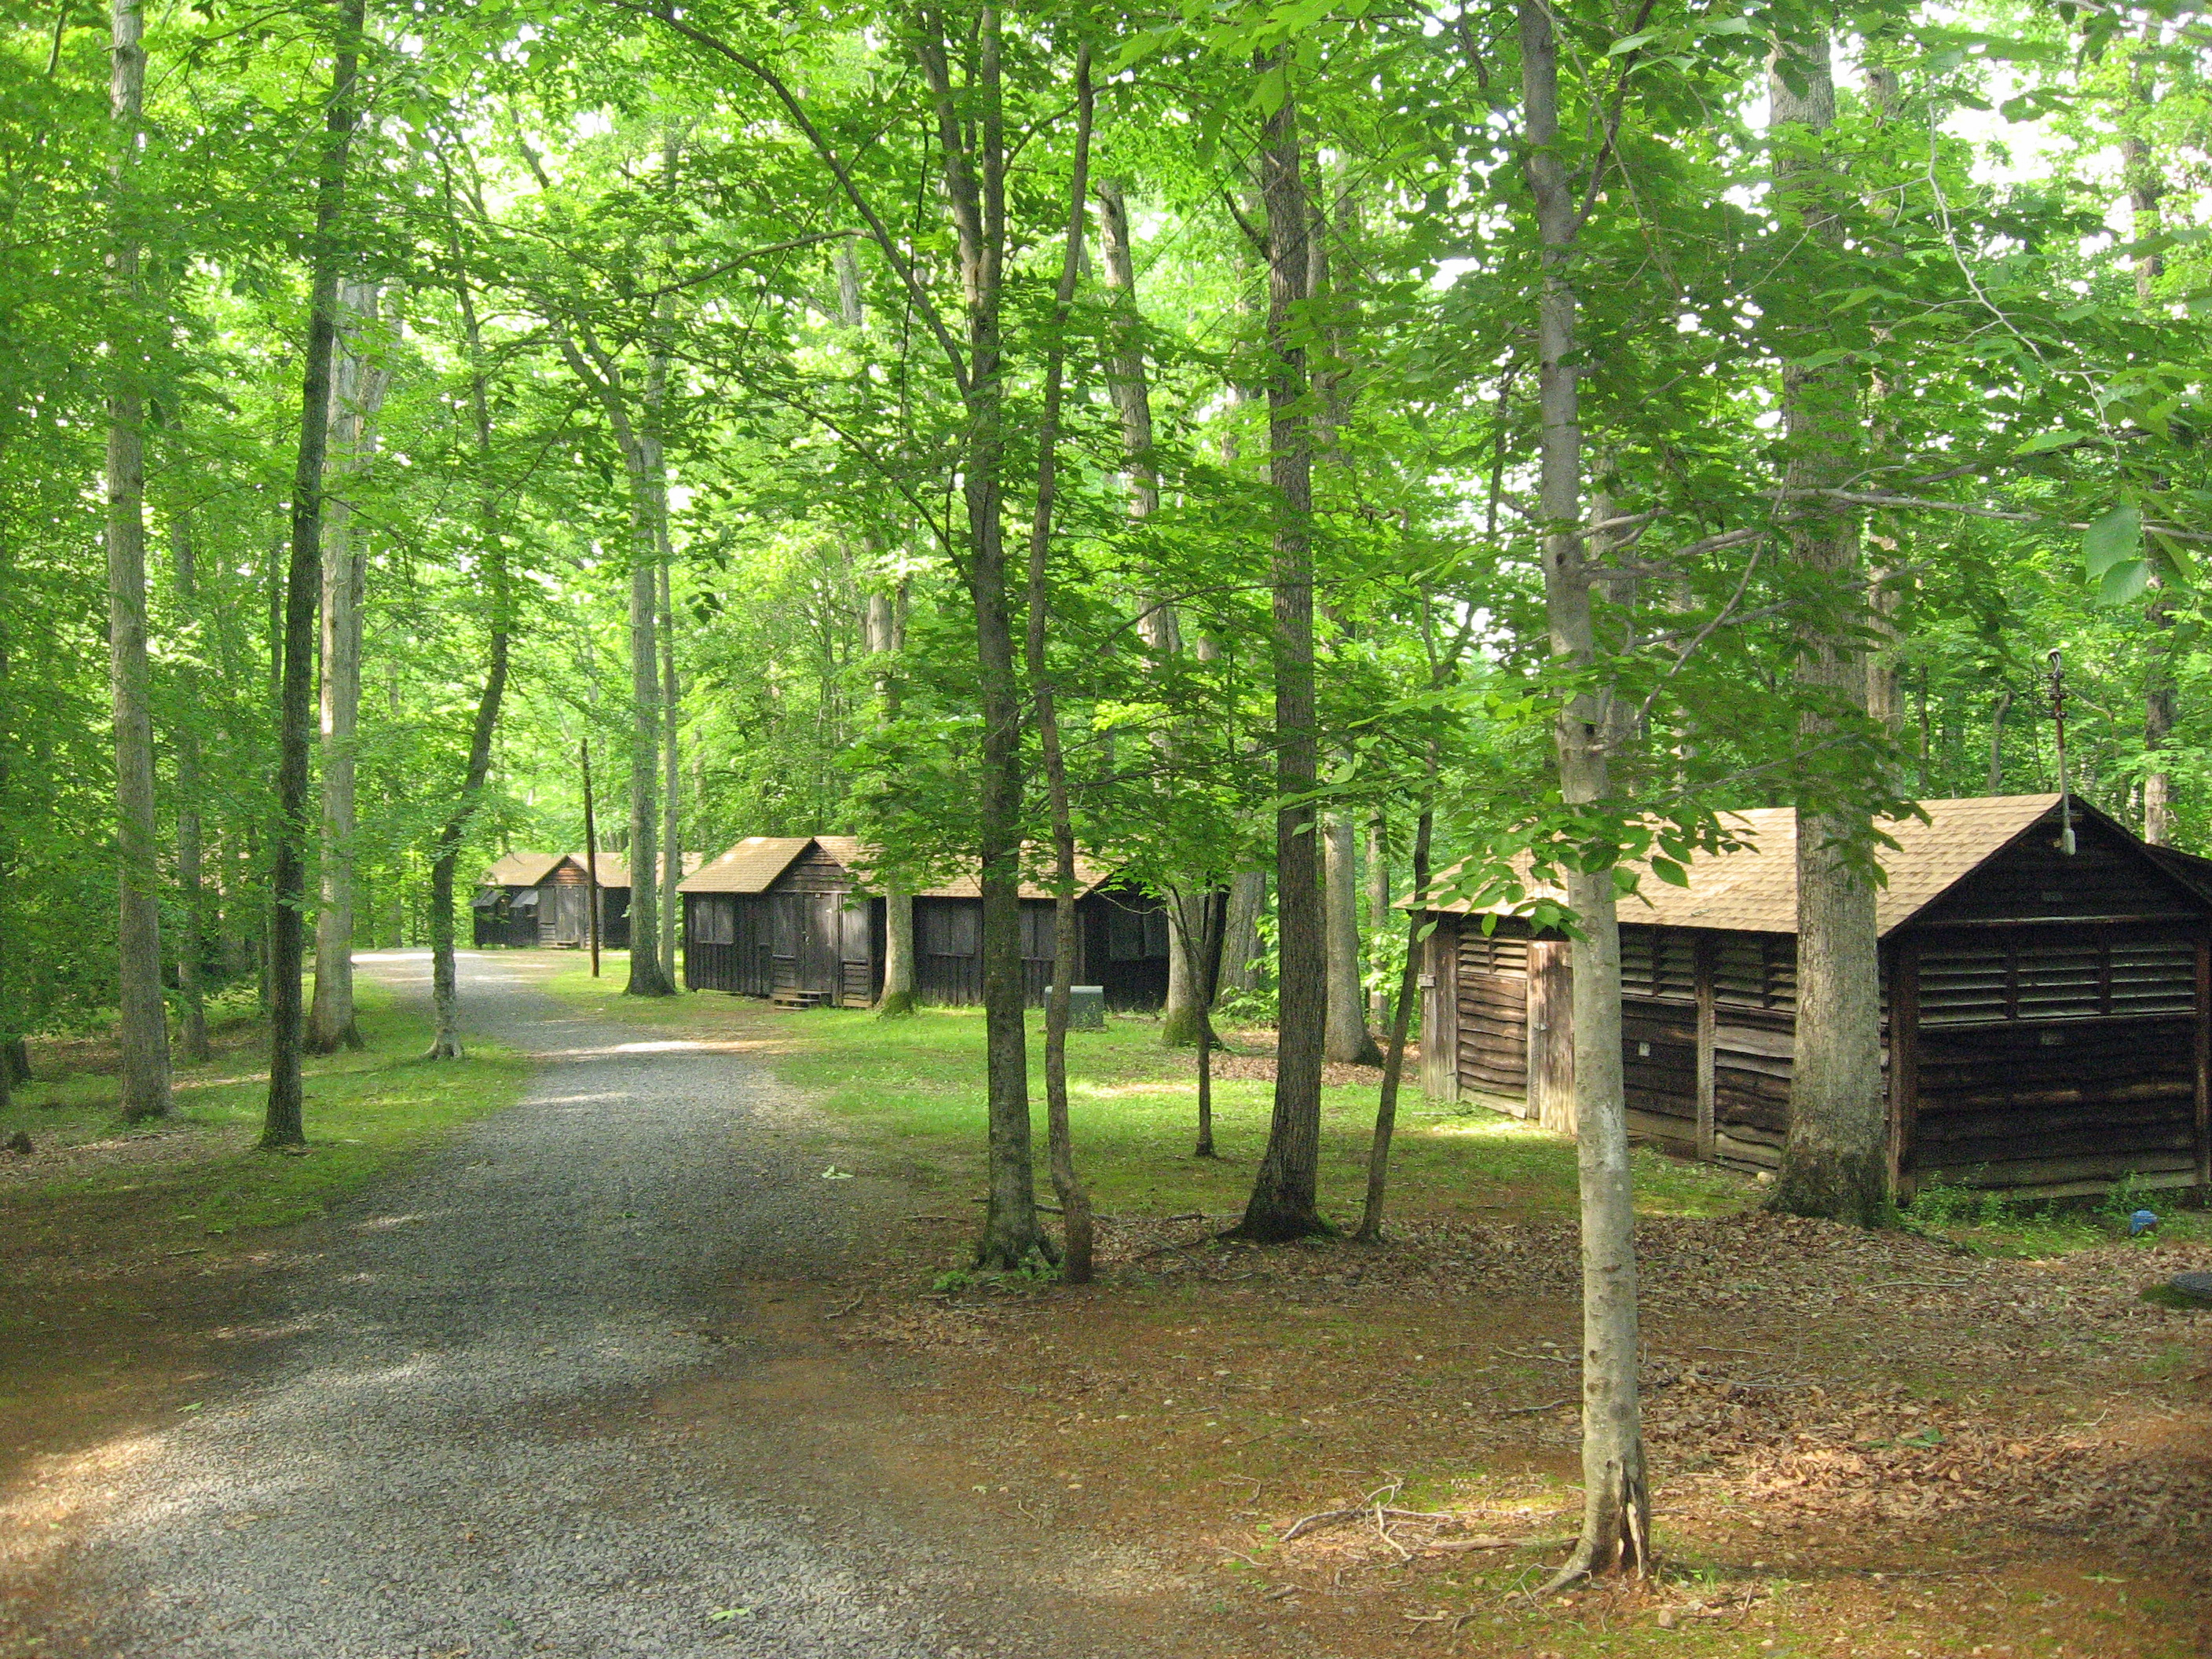 File:Cabin Camp 3 PRWI.JPG - Wikimedia Commons